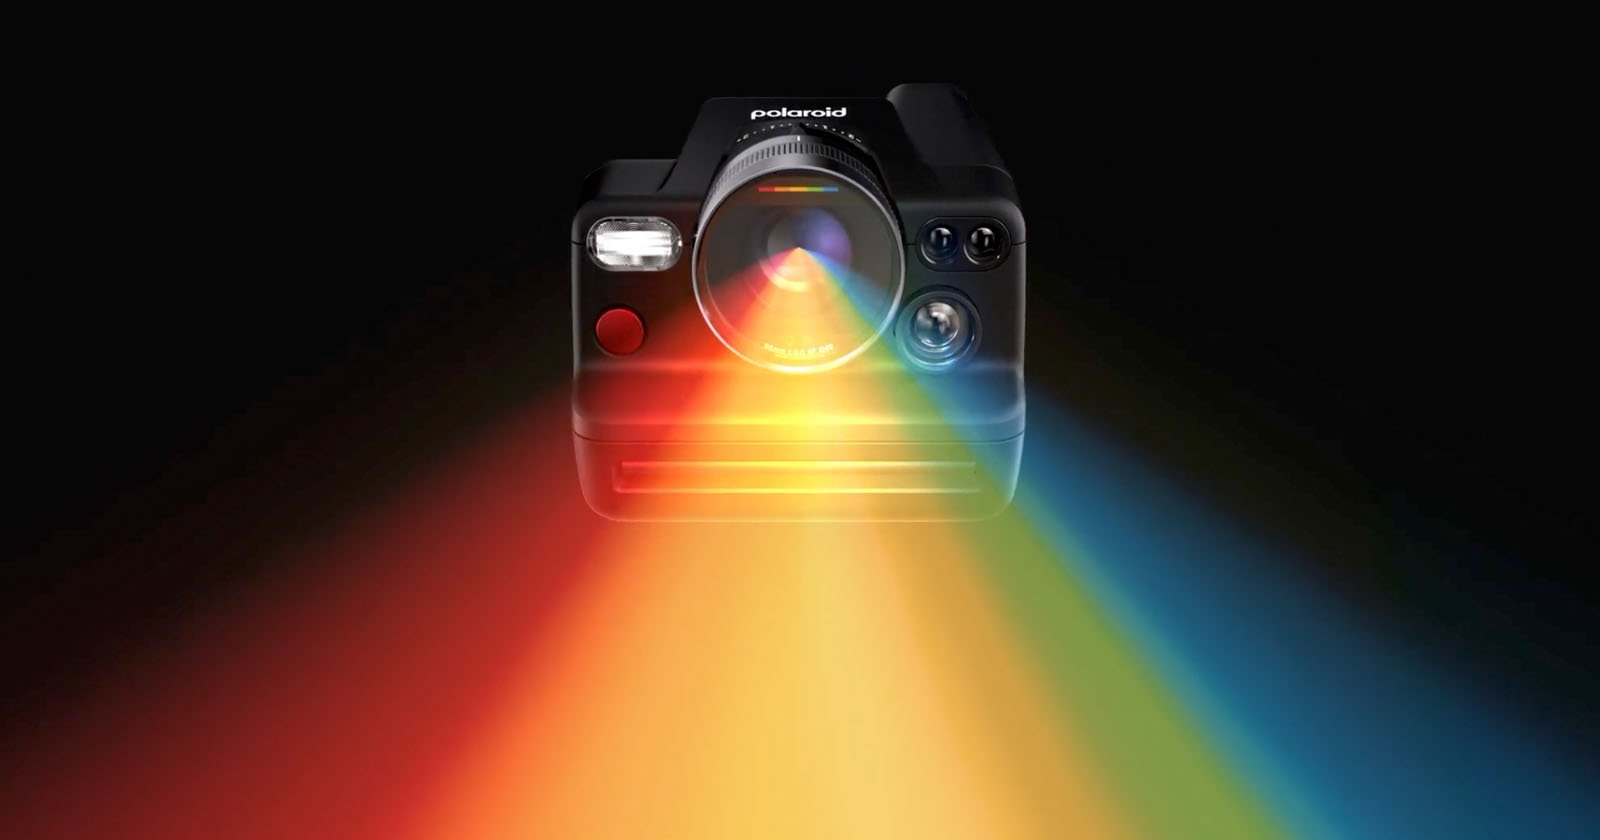  polaroid i-2 instant camera its lowest price 